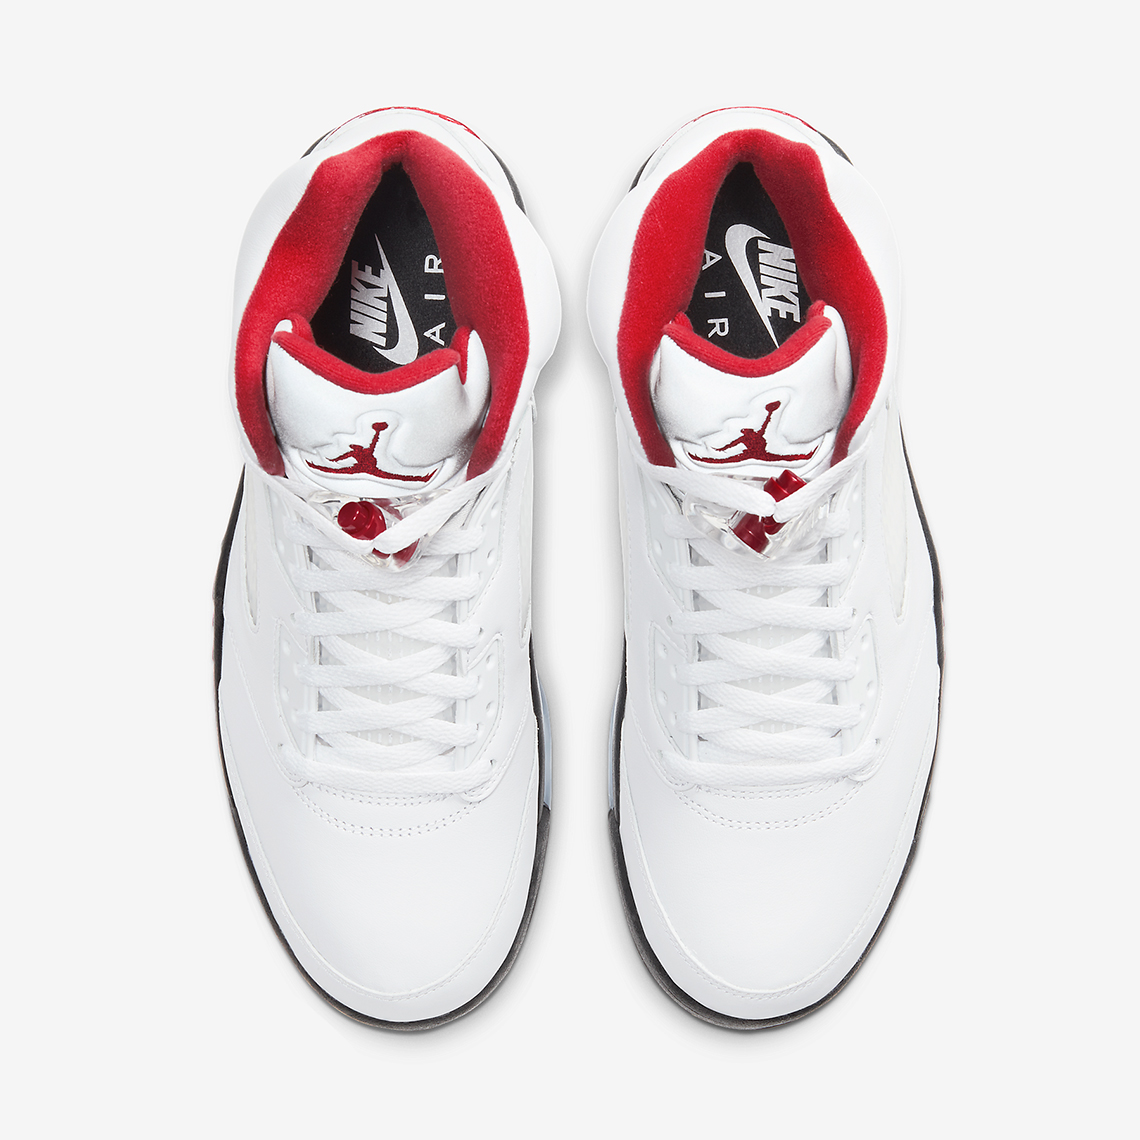 Air Jordan 5 Fire Red Last Dance 2020 Release Date | SneakerNews.com